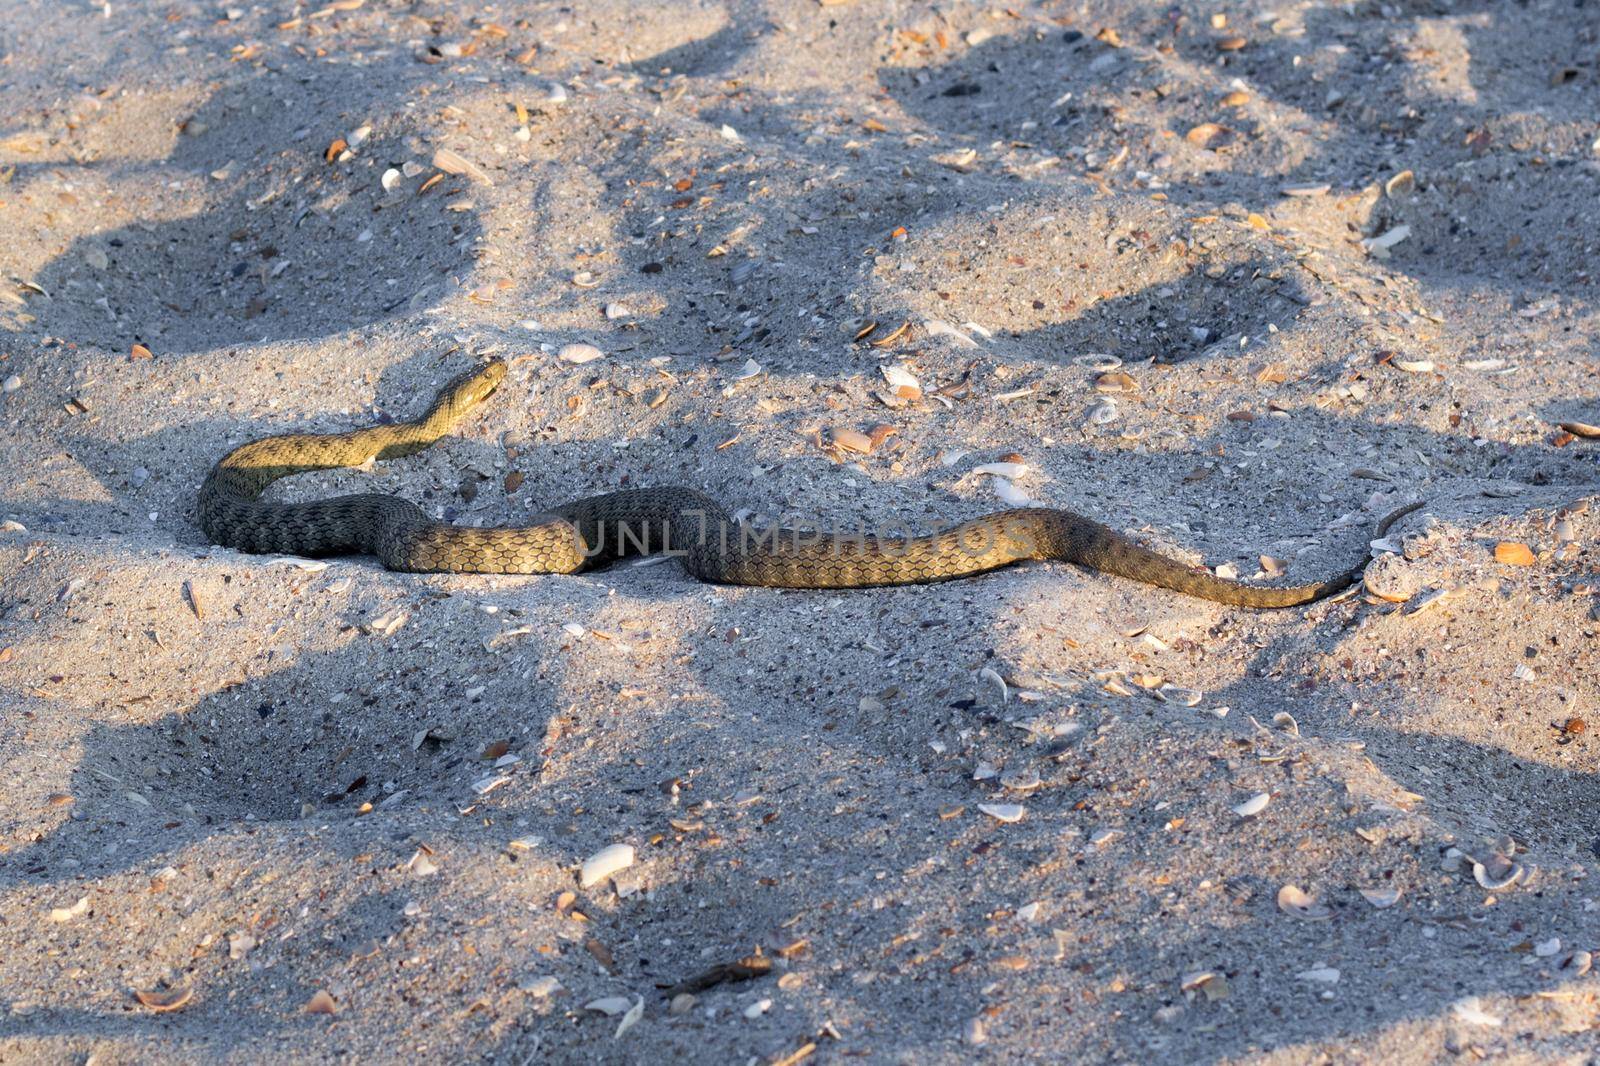 Dangerous poisonous snake viper Vipera Renardi on Black sea beach sands by VeraVerano